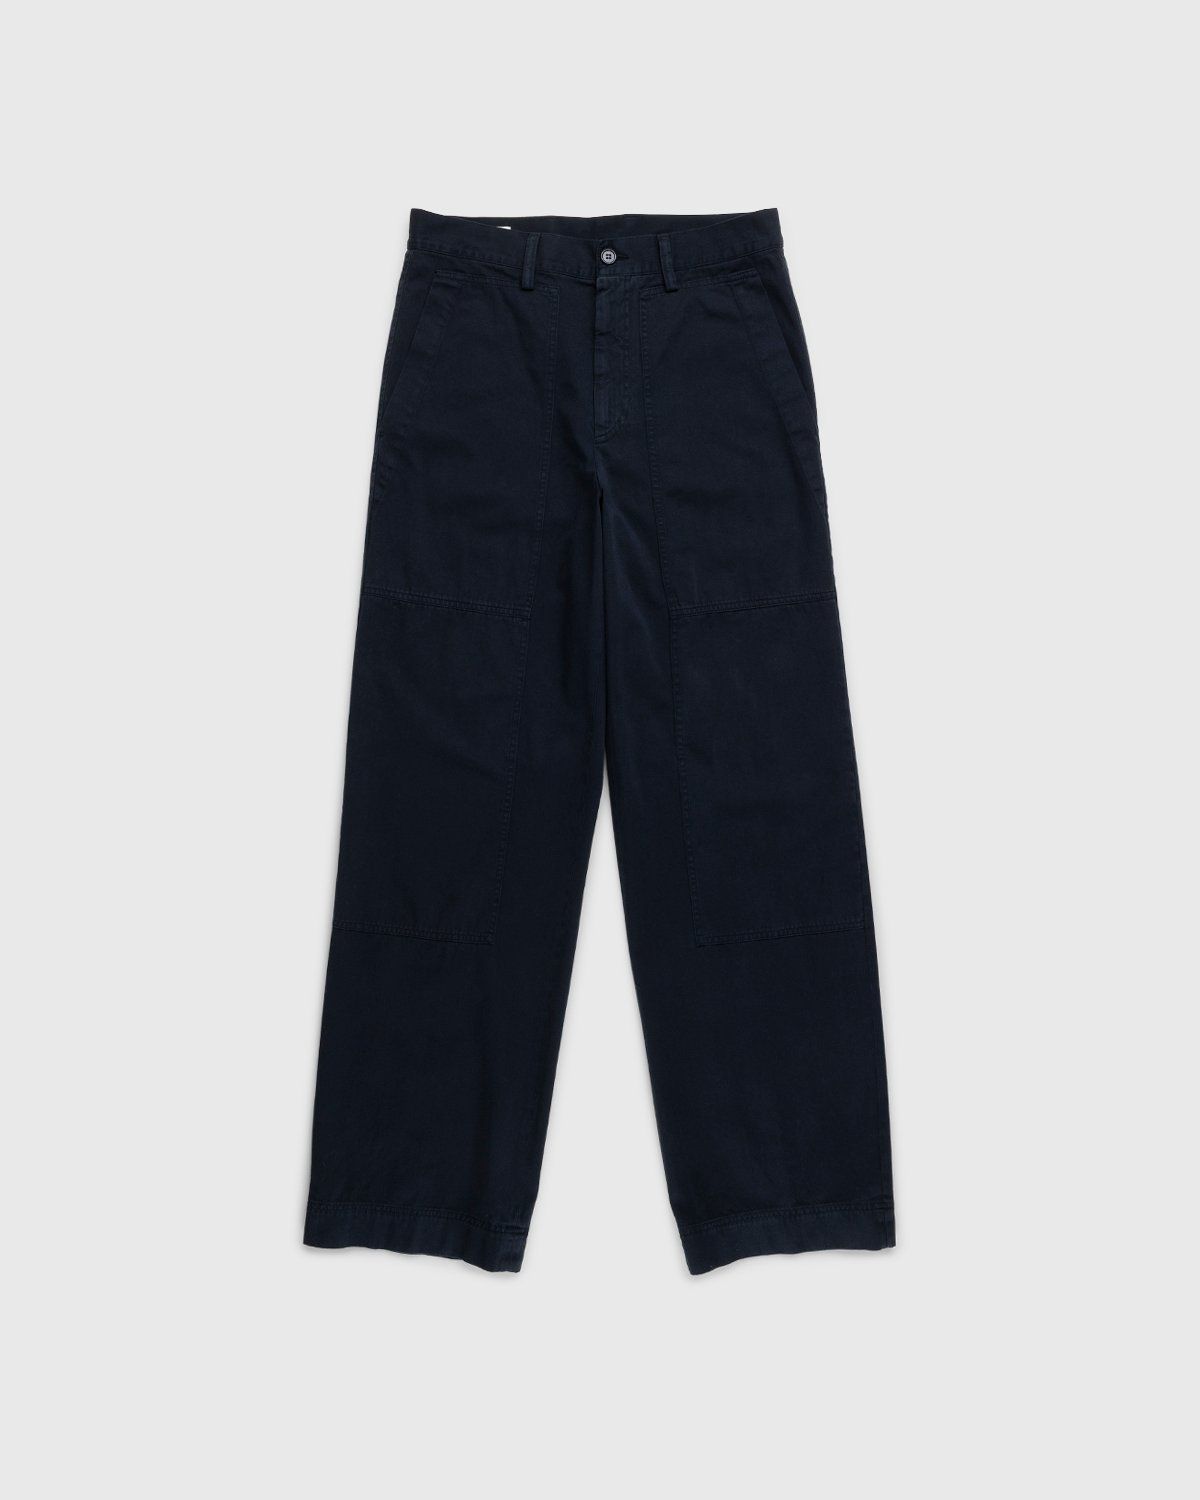 Dries van Noten – Pilson Pants Navy - Trousers - Blue - Image 1